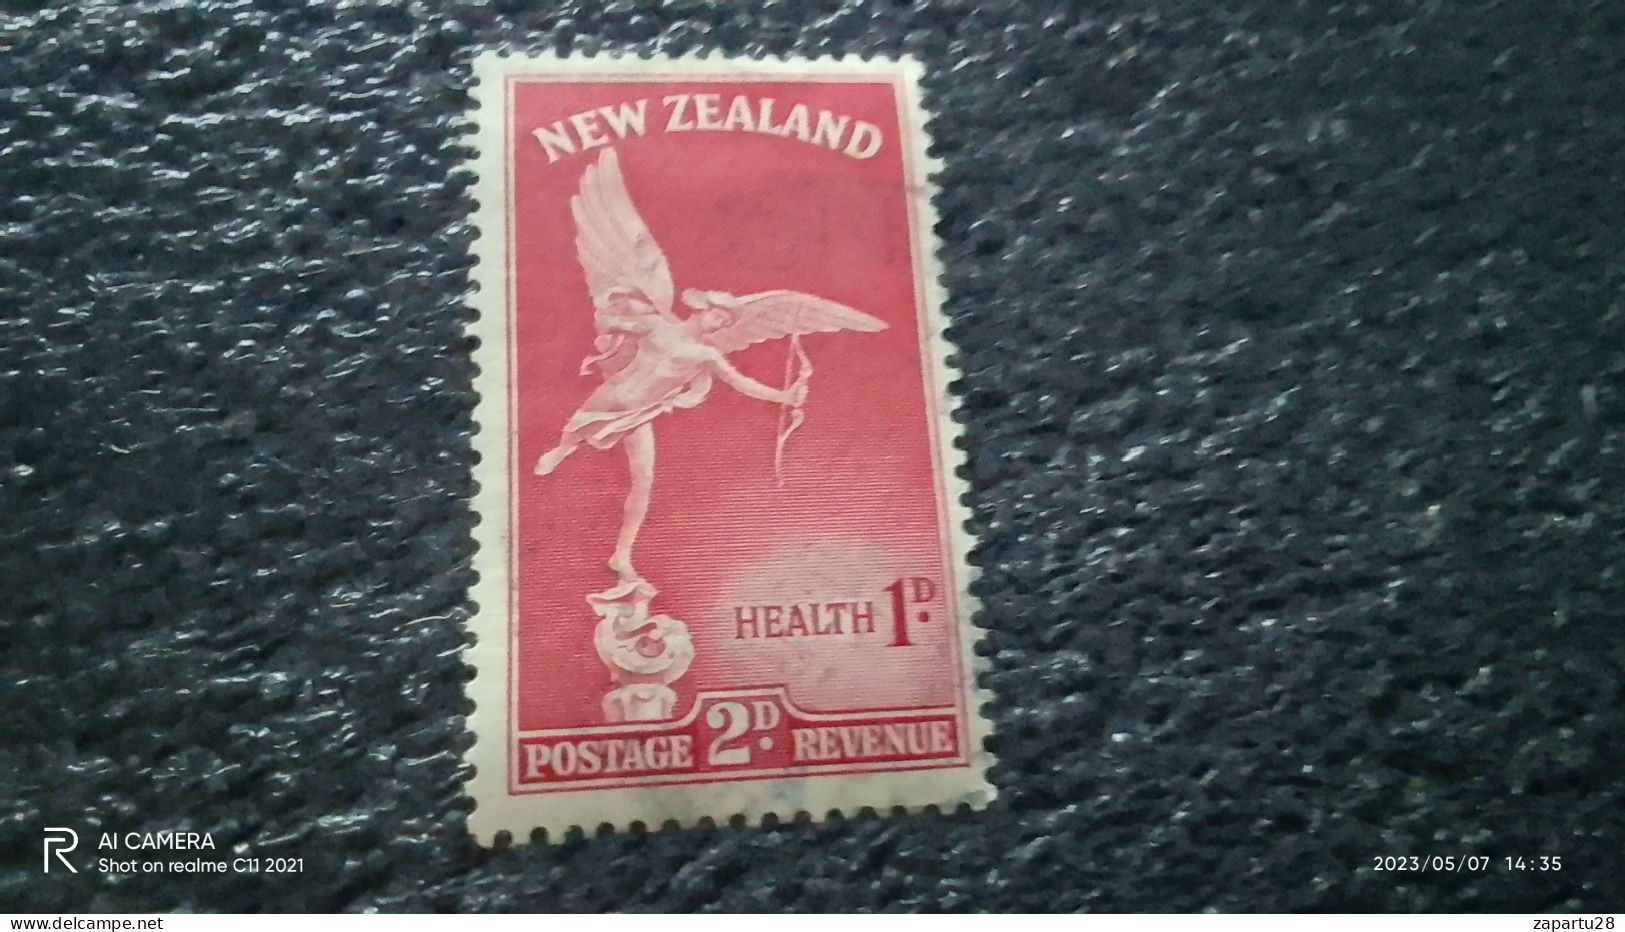 YENİ ZELANDA- 1940-50              2+1P           USED - Used Stamps